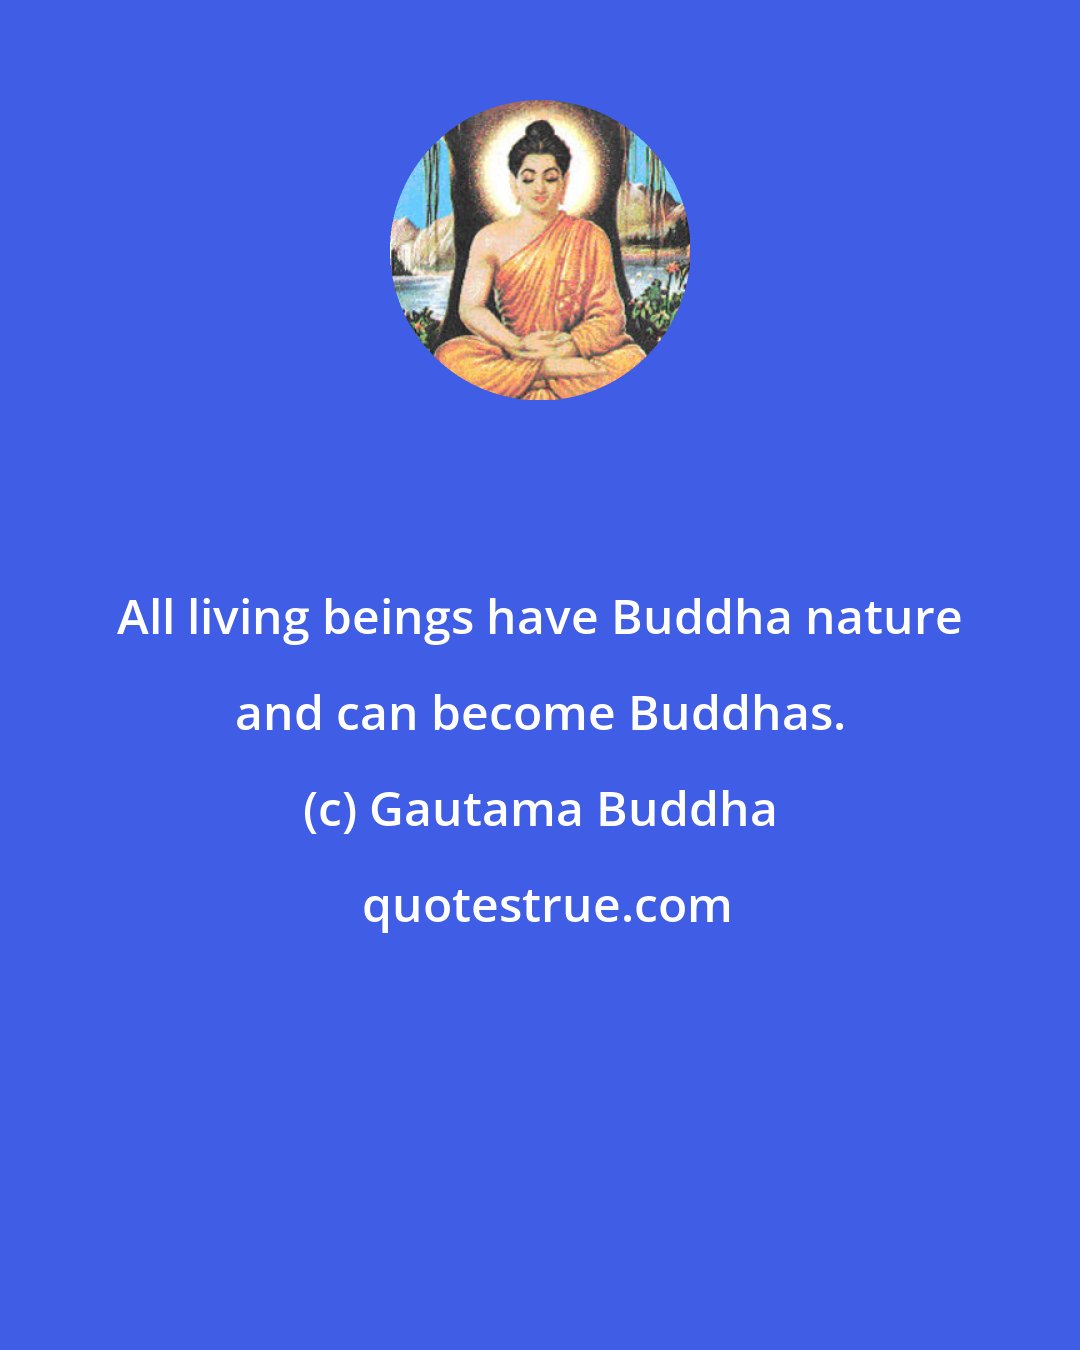 Gautama Buddha: All living beings have Buddha nature and can become Buddhas.